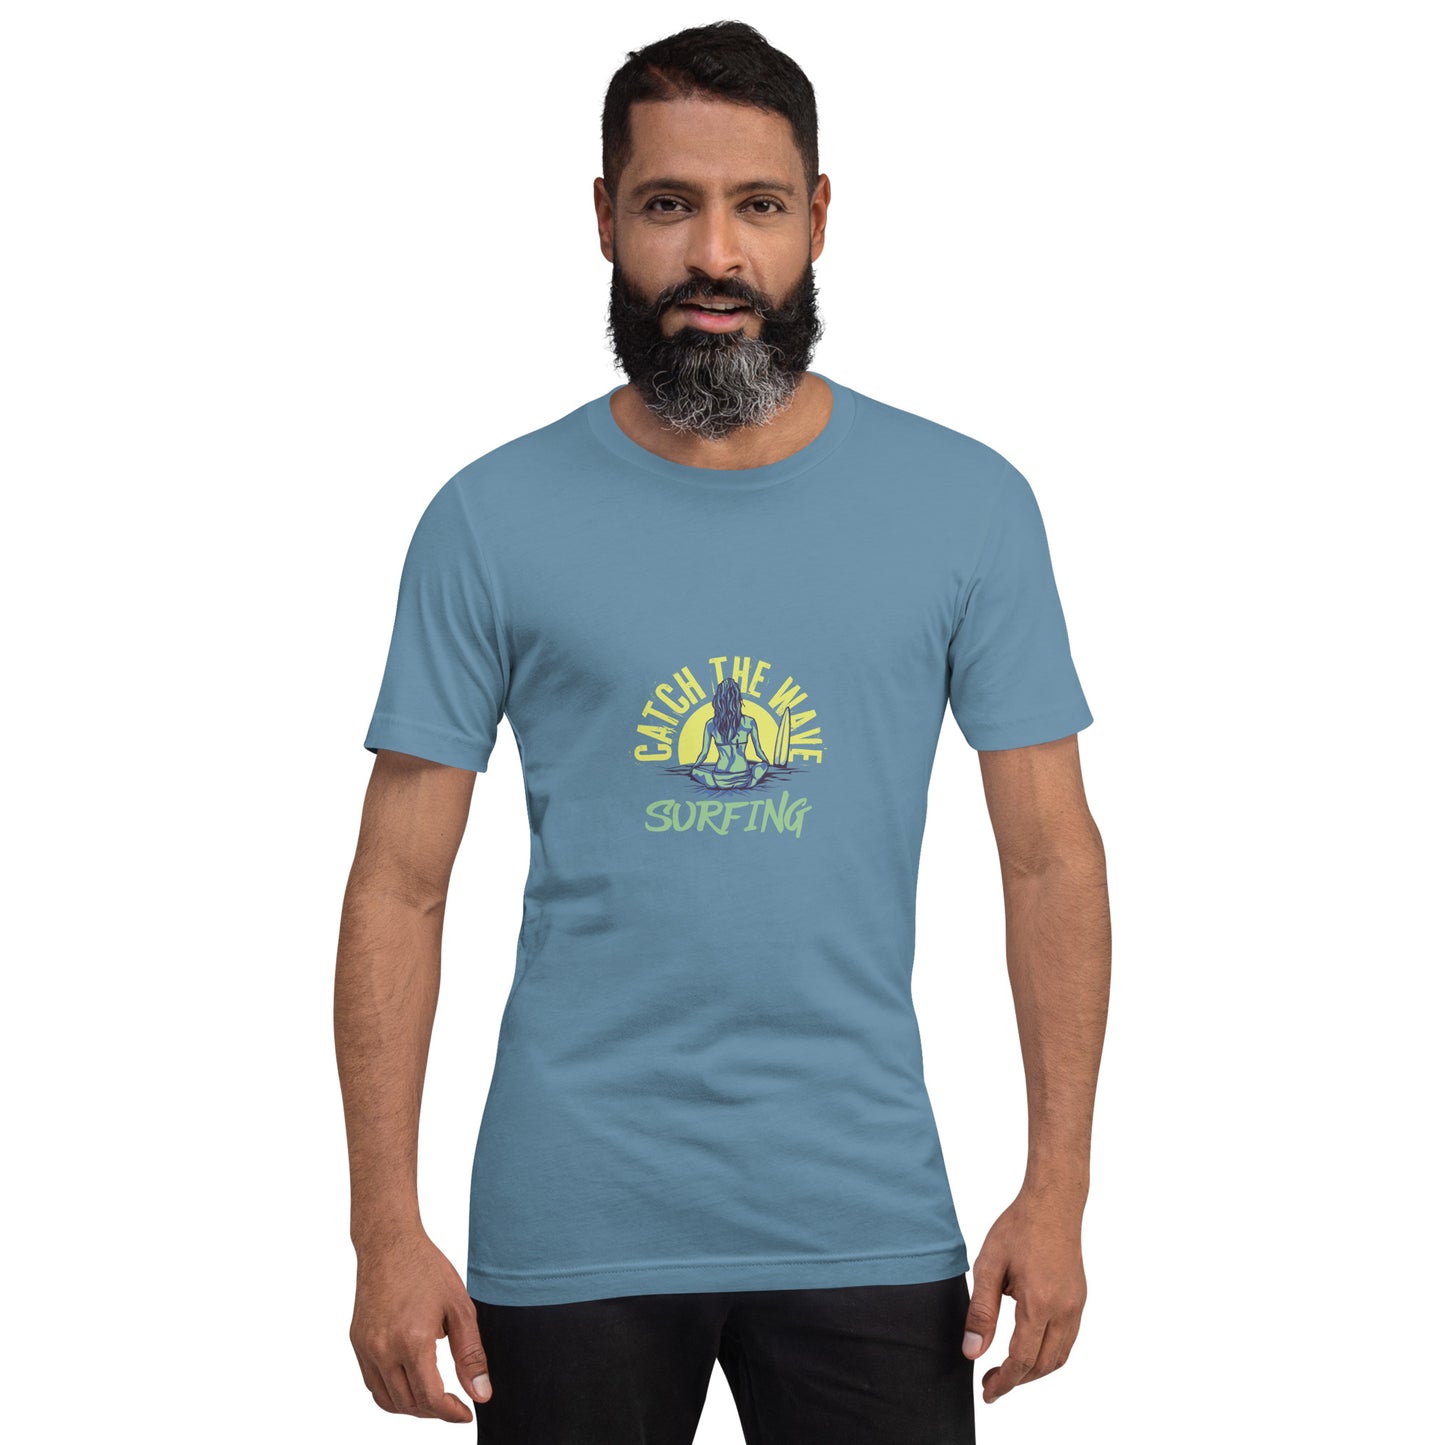 Catch the wave - Unisex t-shirt - HobbyMeFree